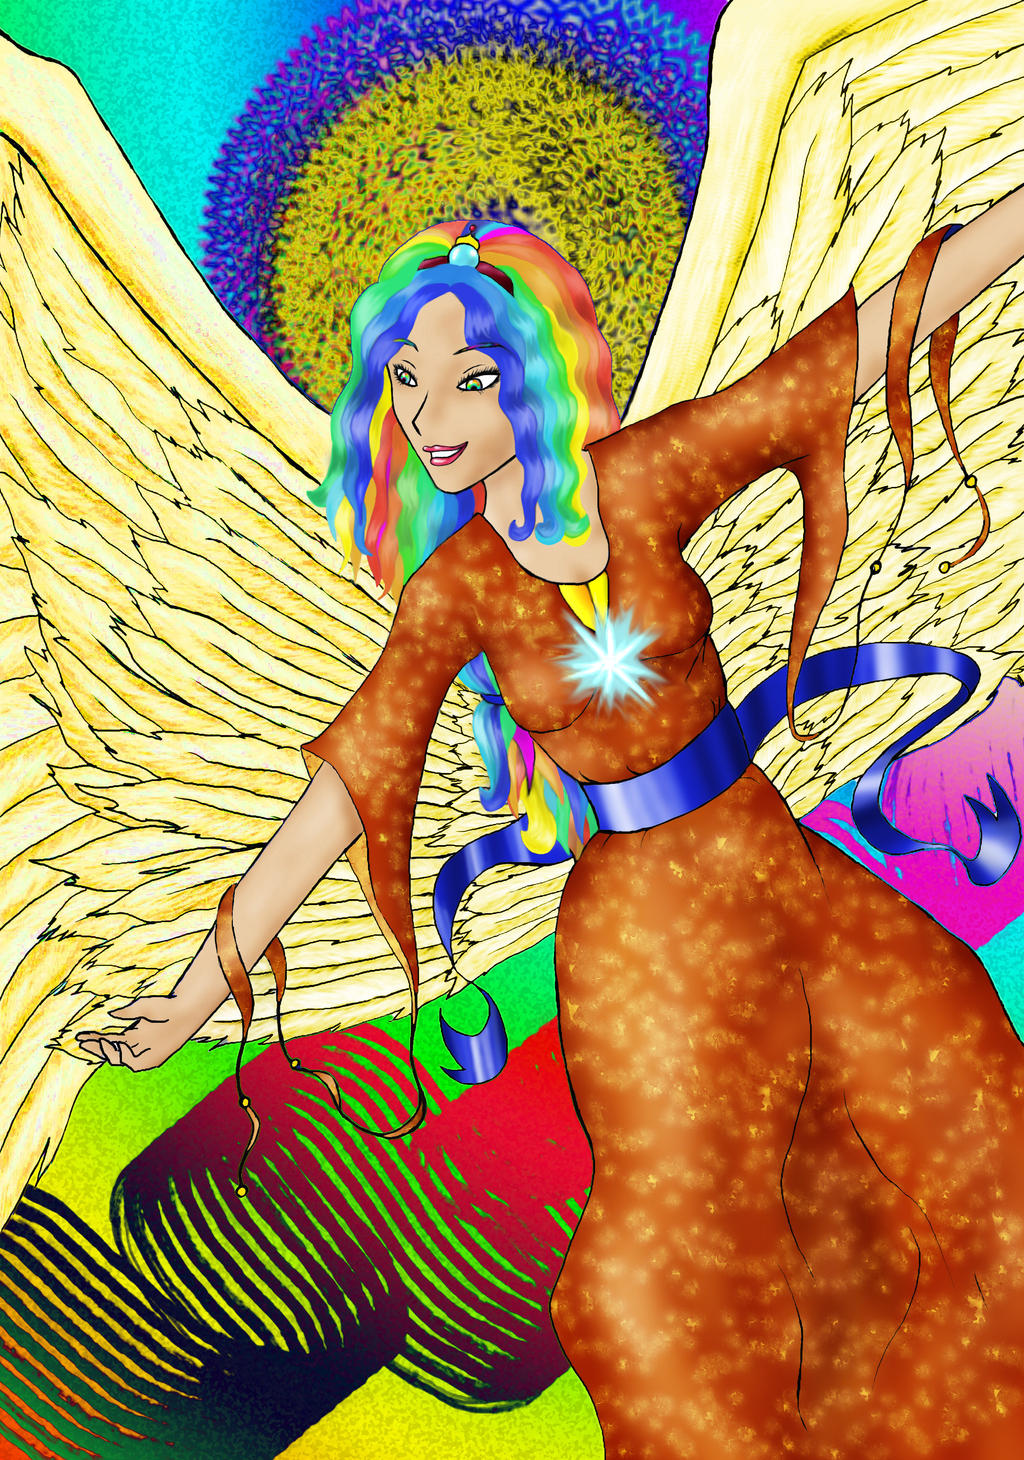 Arch Angel Metatron by Polemia on DeviantArt
